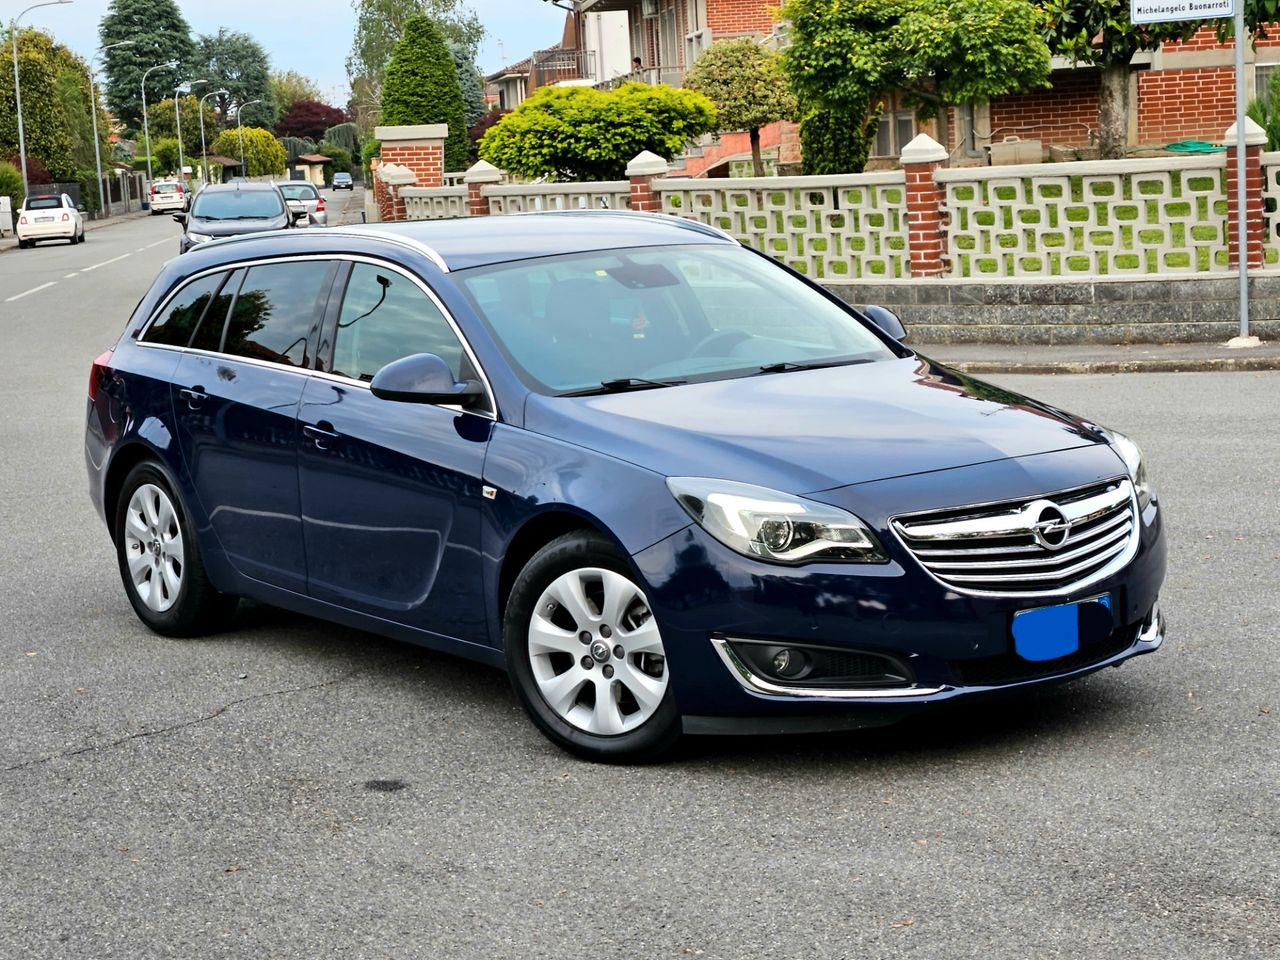 Opel Insignia 2.0 CDTI 140CV modello ristalyng anno 2014 Full Optional